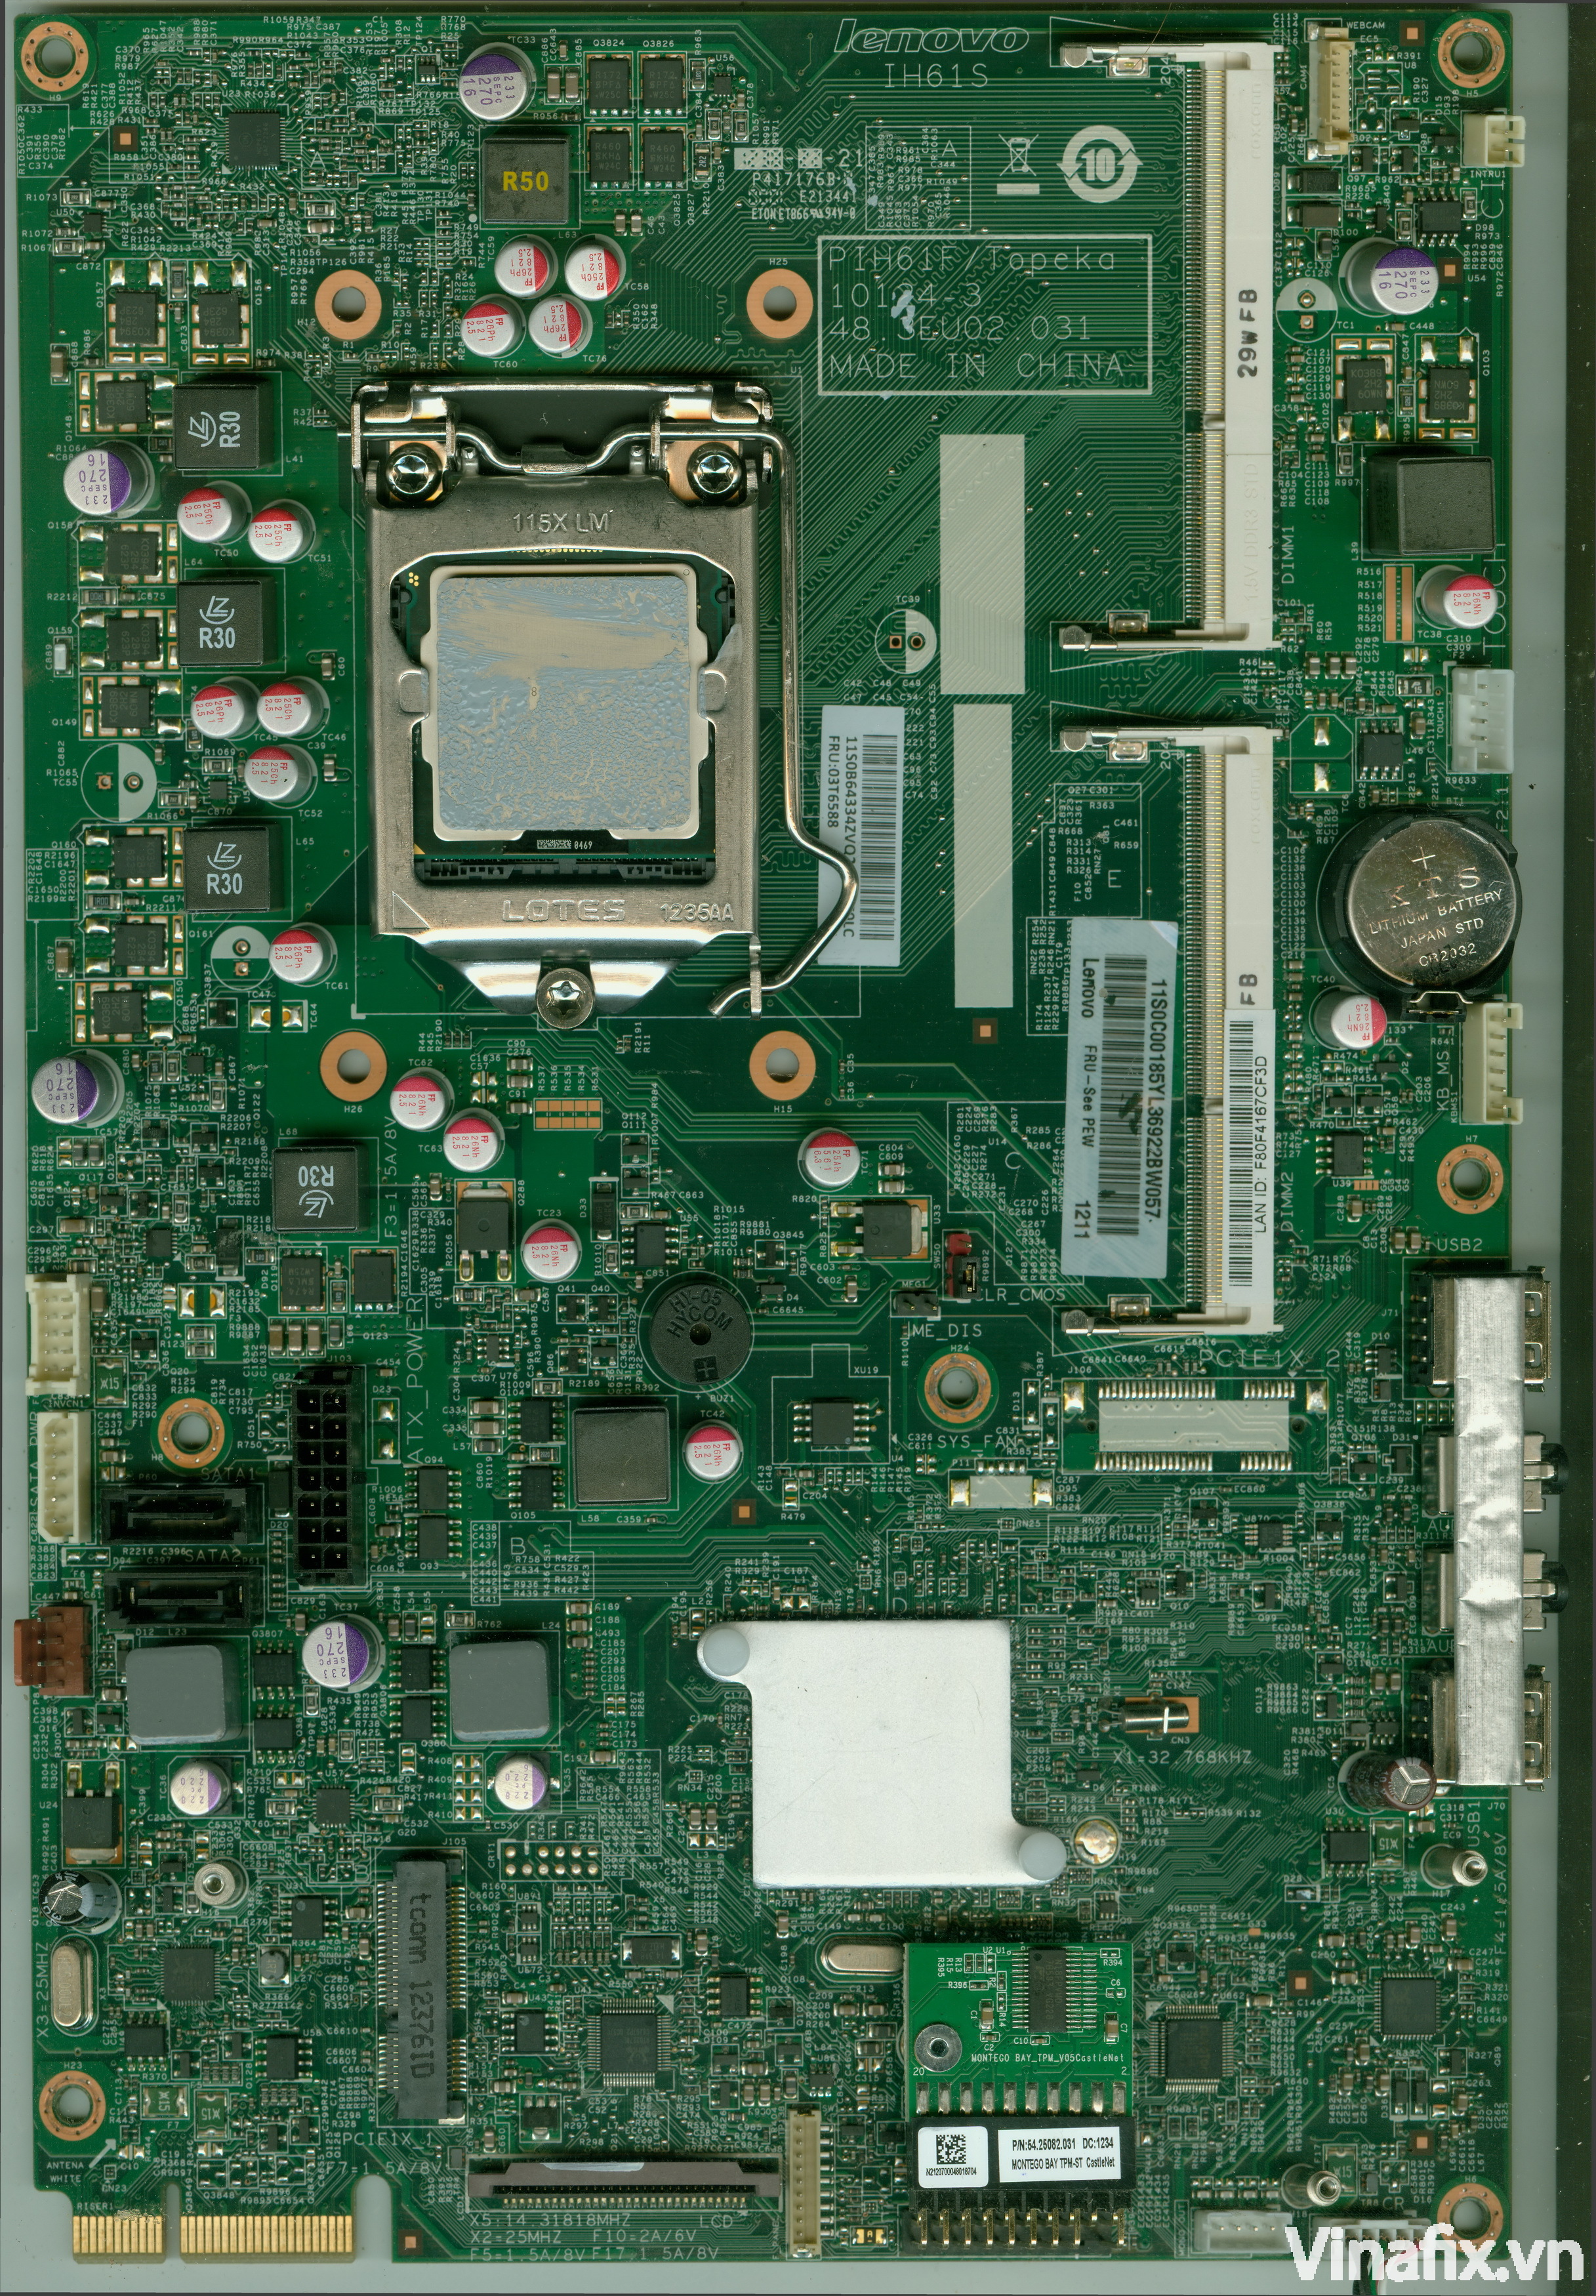 Lenovo ThinkCentre M72z - Wistron PIH61F / Topeka - 10124-3